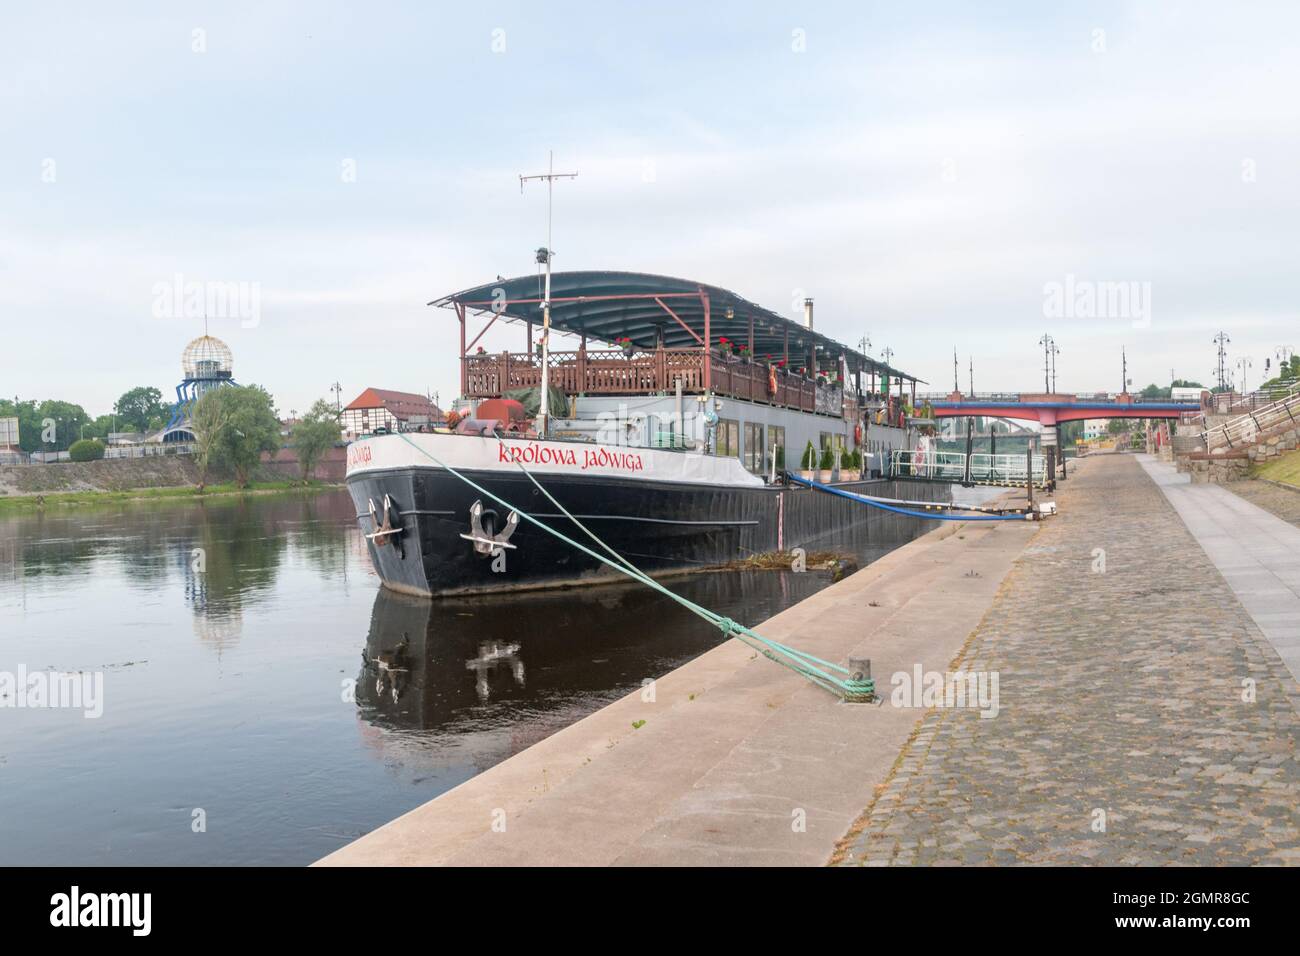 Gorzow Wielkopolski, Poland - June 1, 2021: Krolowa Jadwiga (Queen Jadwiga) ship on warta river. Stock Photo